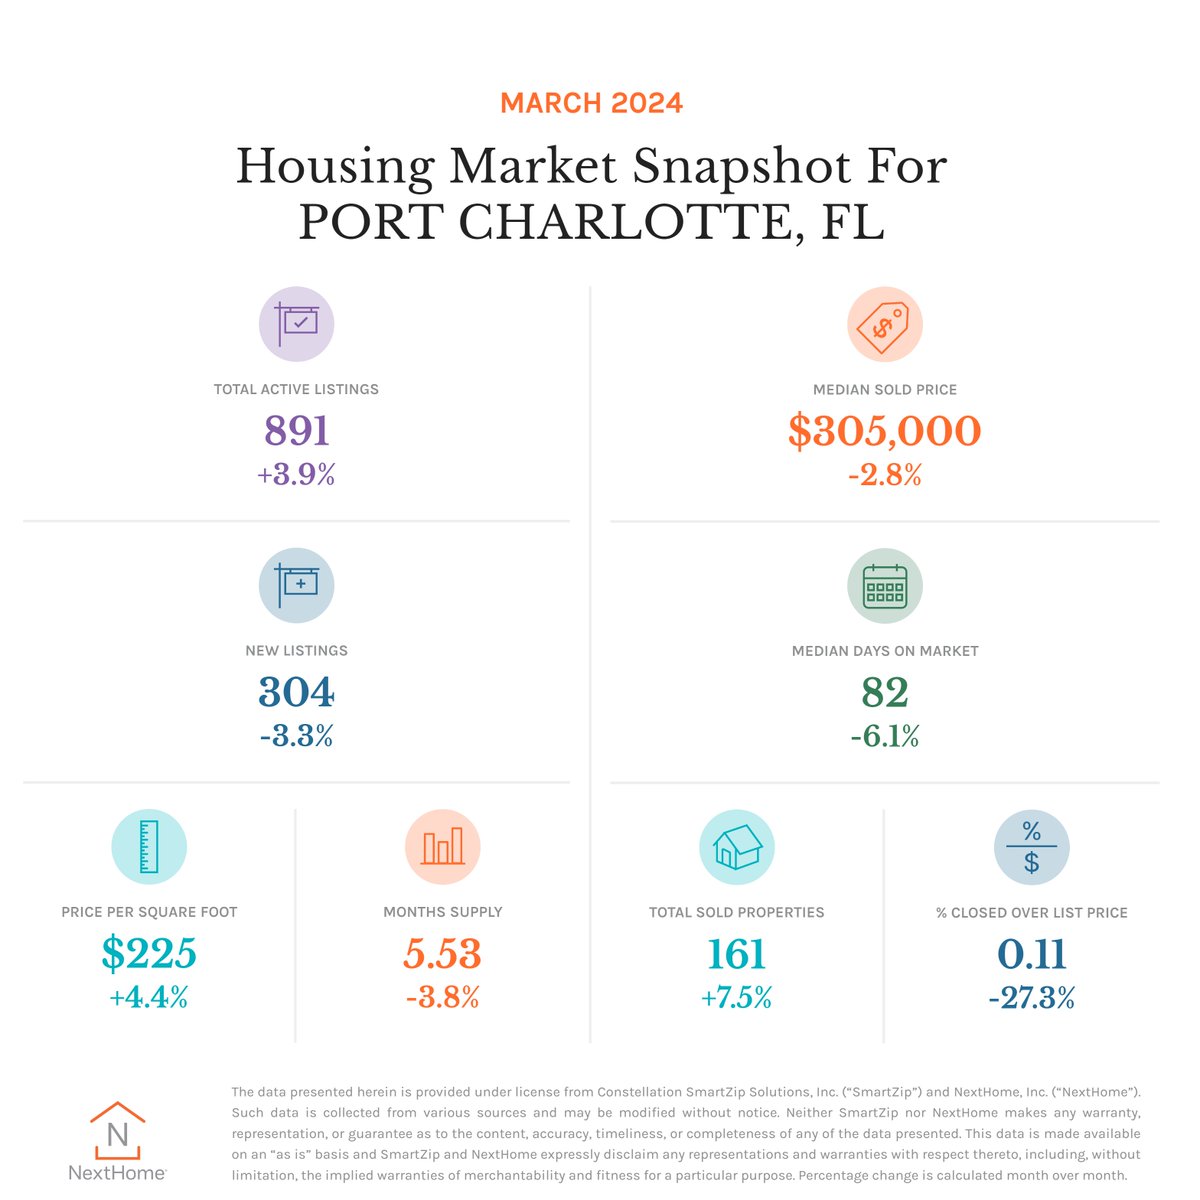 Check out the latest Housing Market Update for Port Charlotte, FL. #MondayMarketUpdate #PortCharlotteFlorida #PortCharlotteFL #PortCharlotte #Florida #suncoast #buying #selling #listing #realestate #housingmarket #NextHomeSuncoast